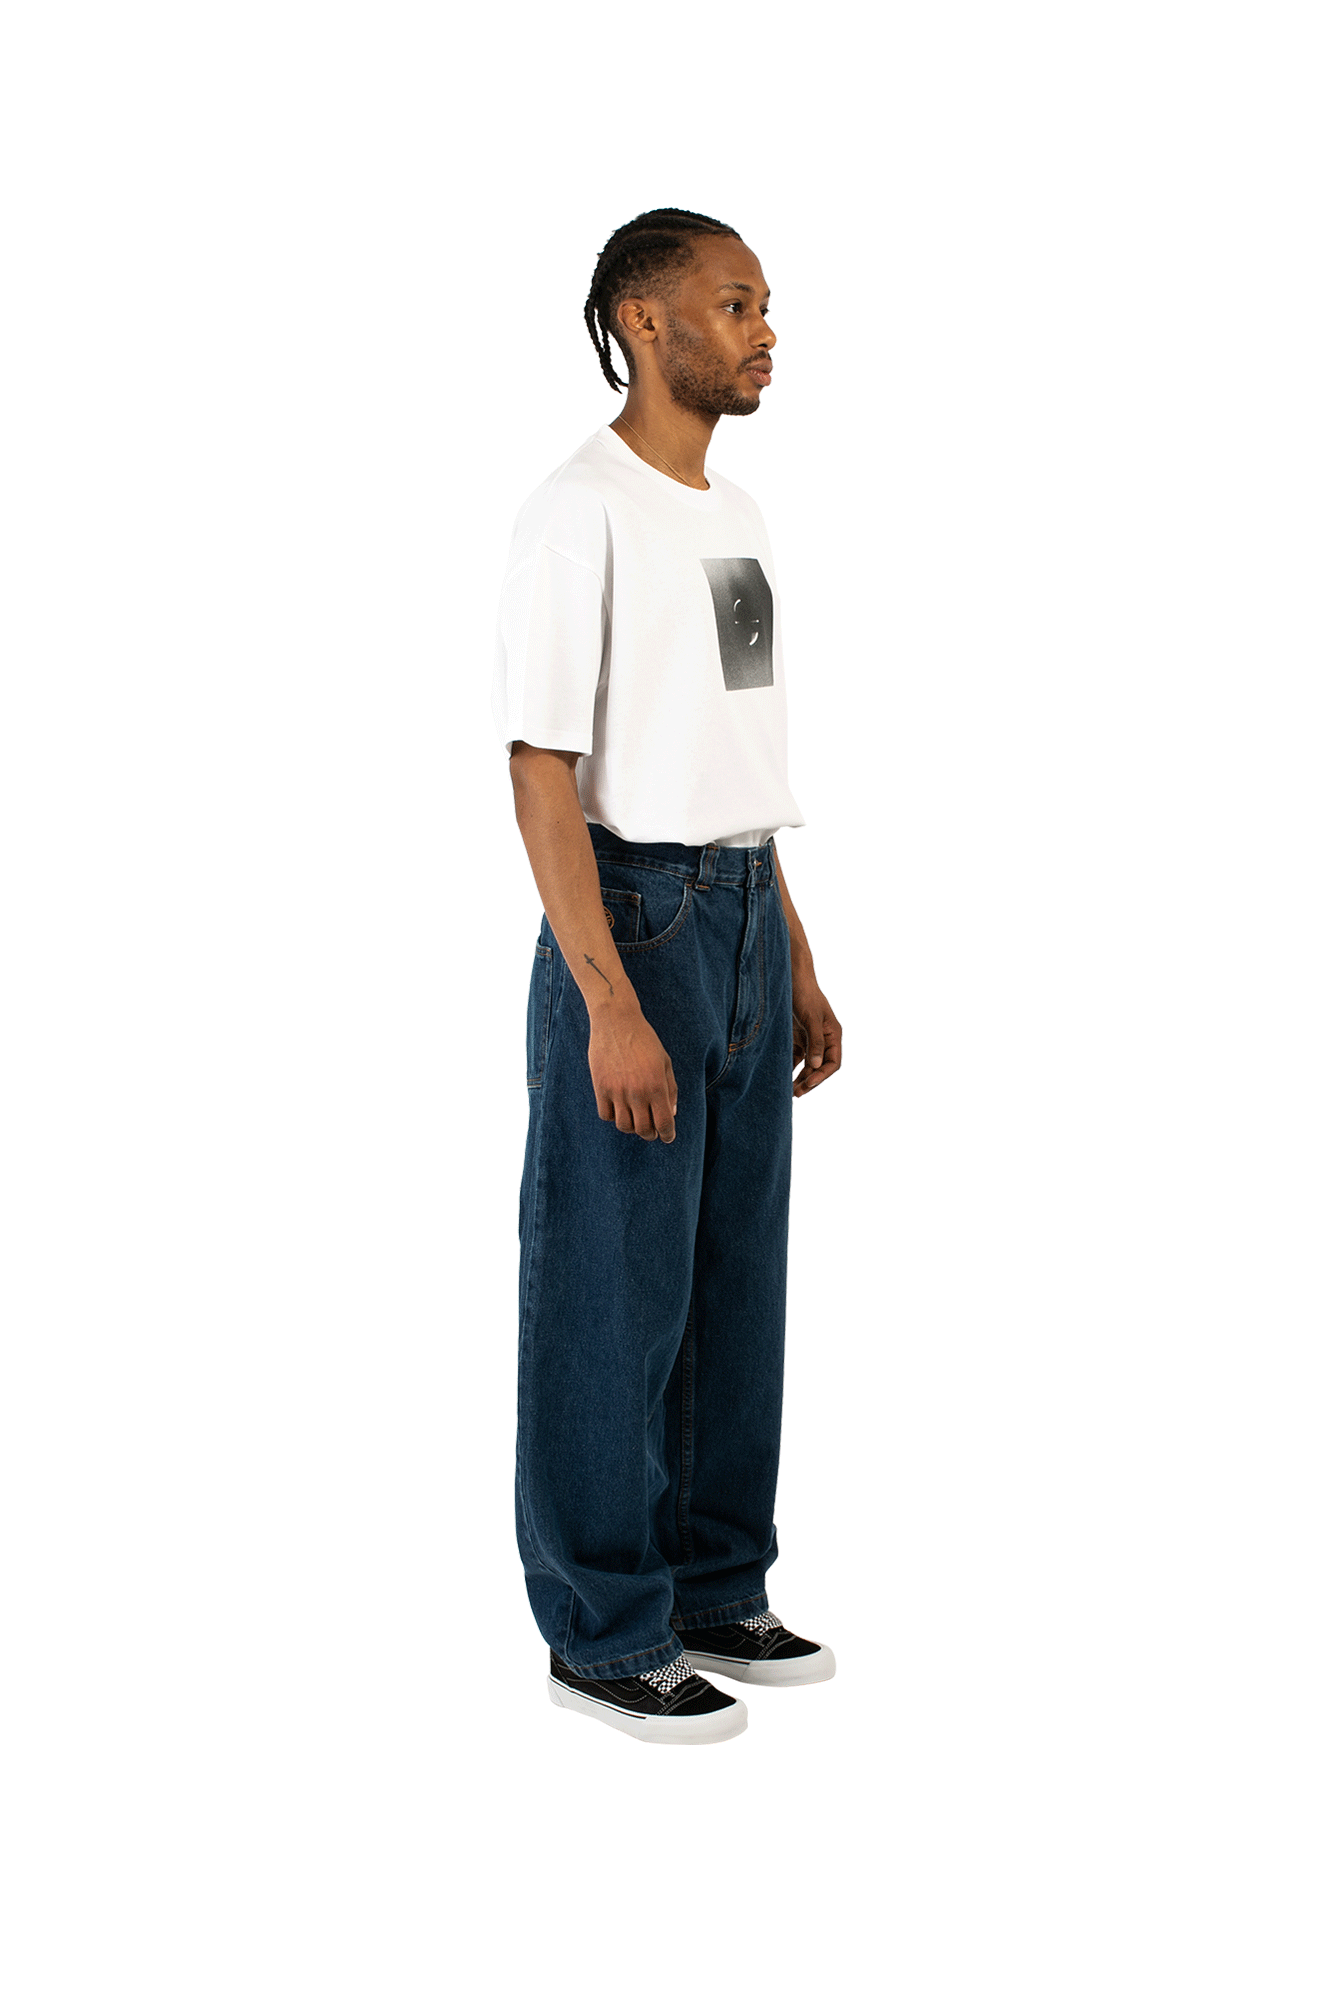 Big Boy Jeans